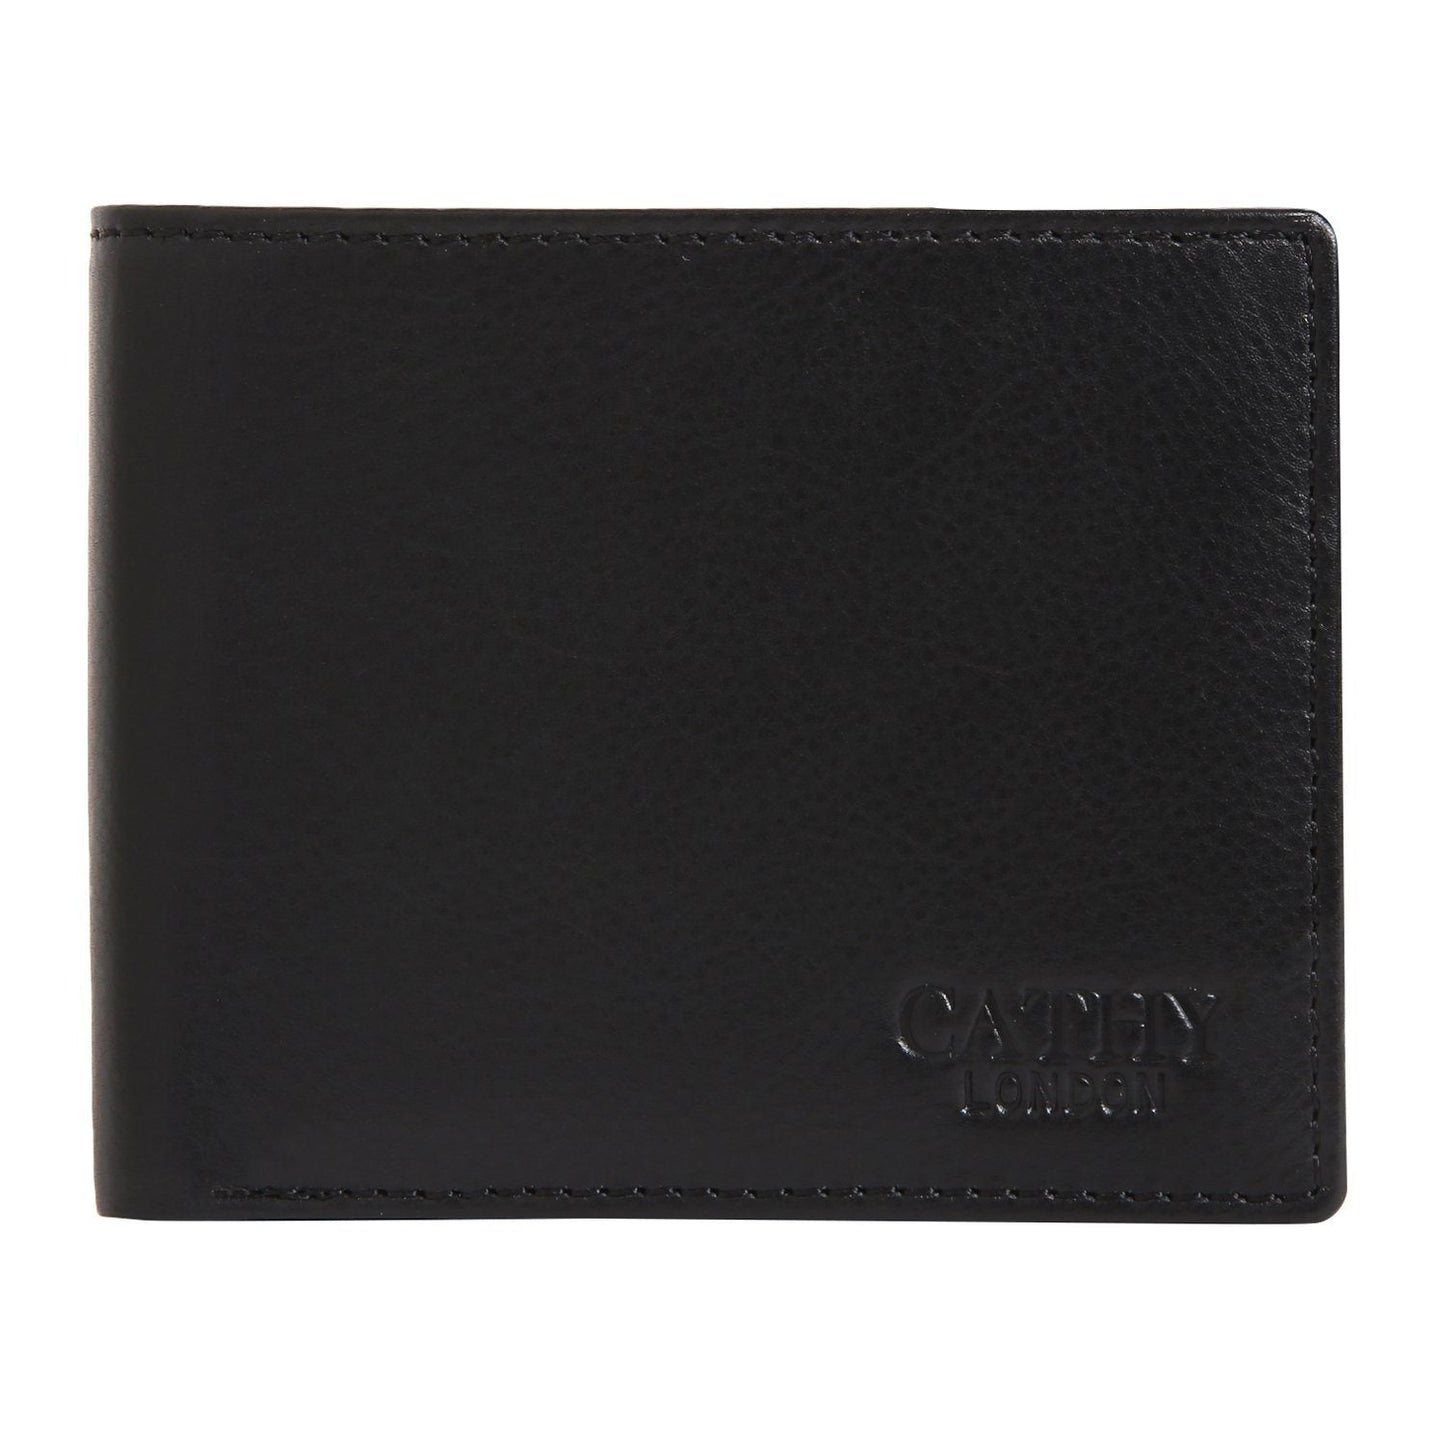 Black Colour Bi-Fold Italian Leather Slim Wallet (8 Card Slot + 2 Hidden Compartment + 1 ID Slot + Coin Pocket + Cash Compartment) Cathy London 